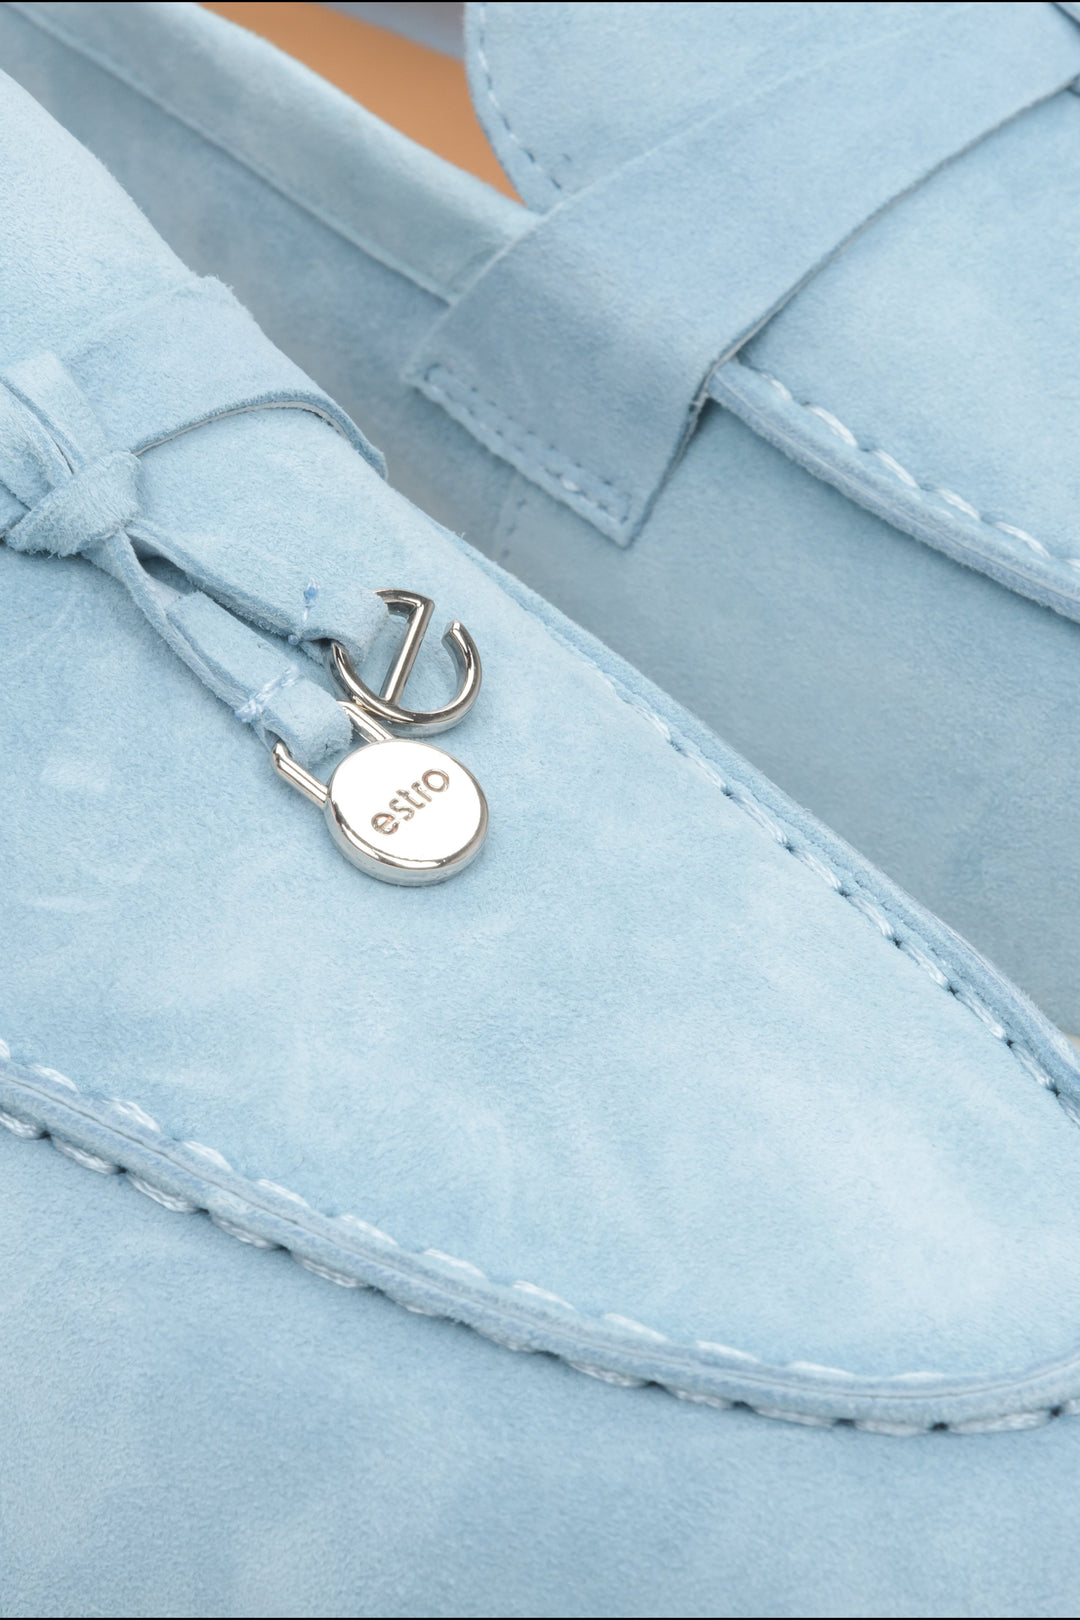 Light blue comfy and elegant women's velour loafers - close-up on details.